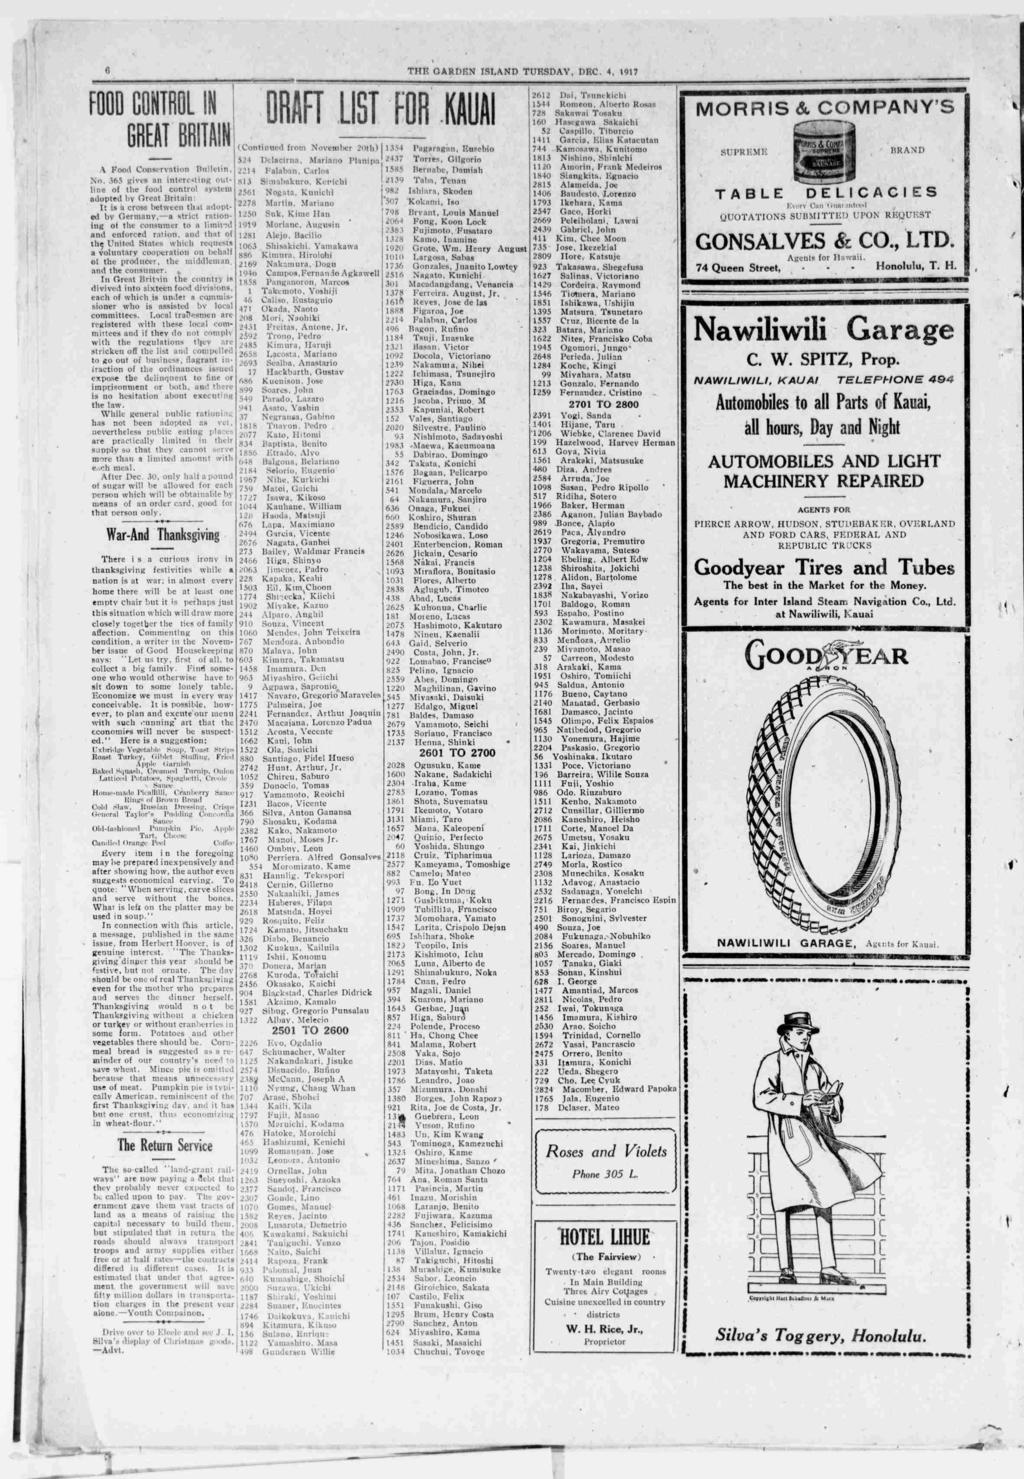 THE GARDEN SLAND TUESDAY, DEC. 4, 1917 FOOD CONTROL 111 GREAT BRTAN A Food Conservaton Bulletn, No.